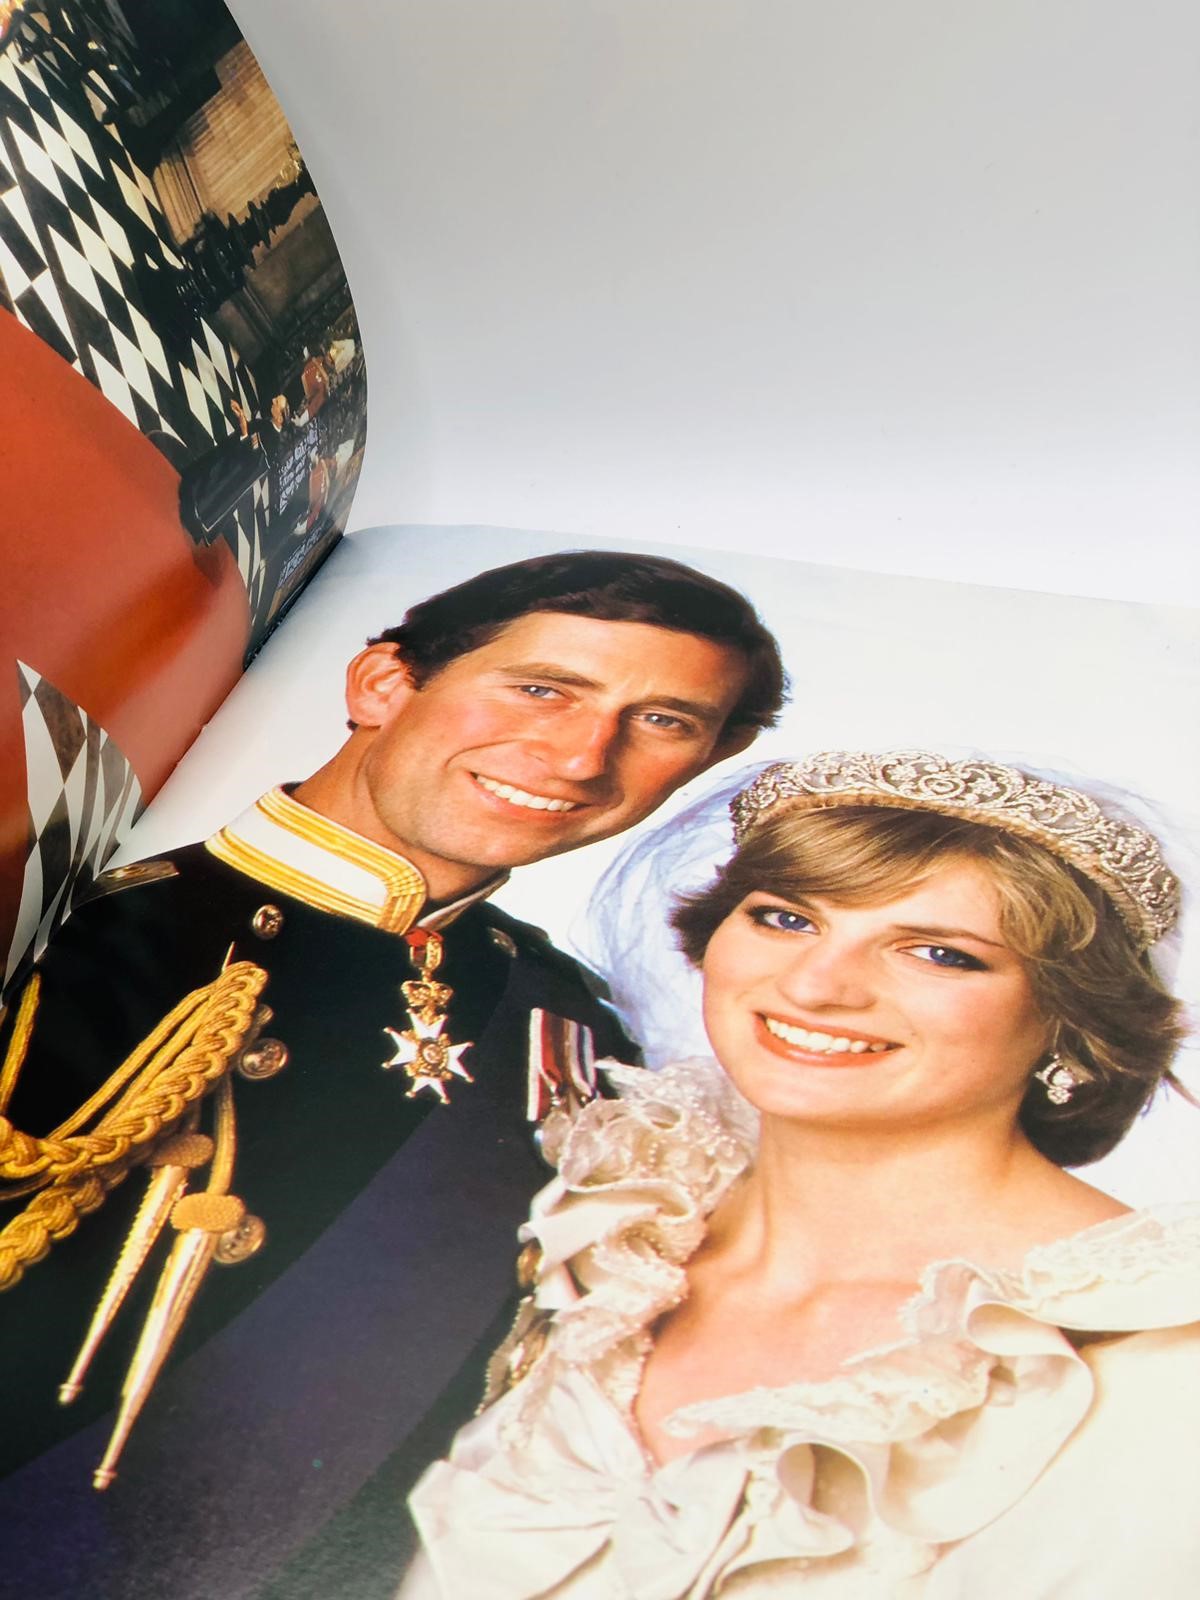 Royal Memorabilia The Prince and Princess of Wales Wedding Day Book 1981 Collectors - Image 2 of 4